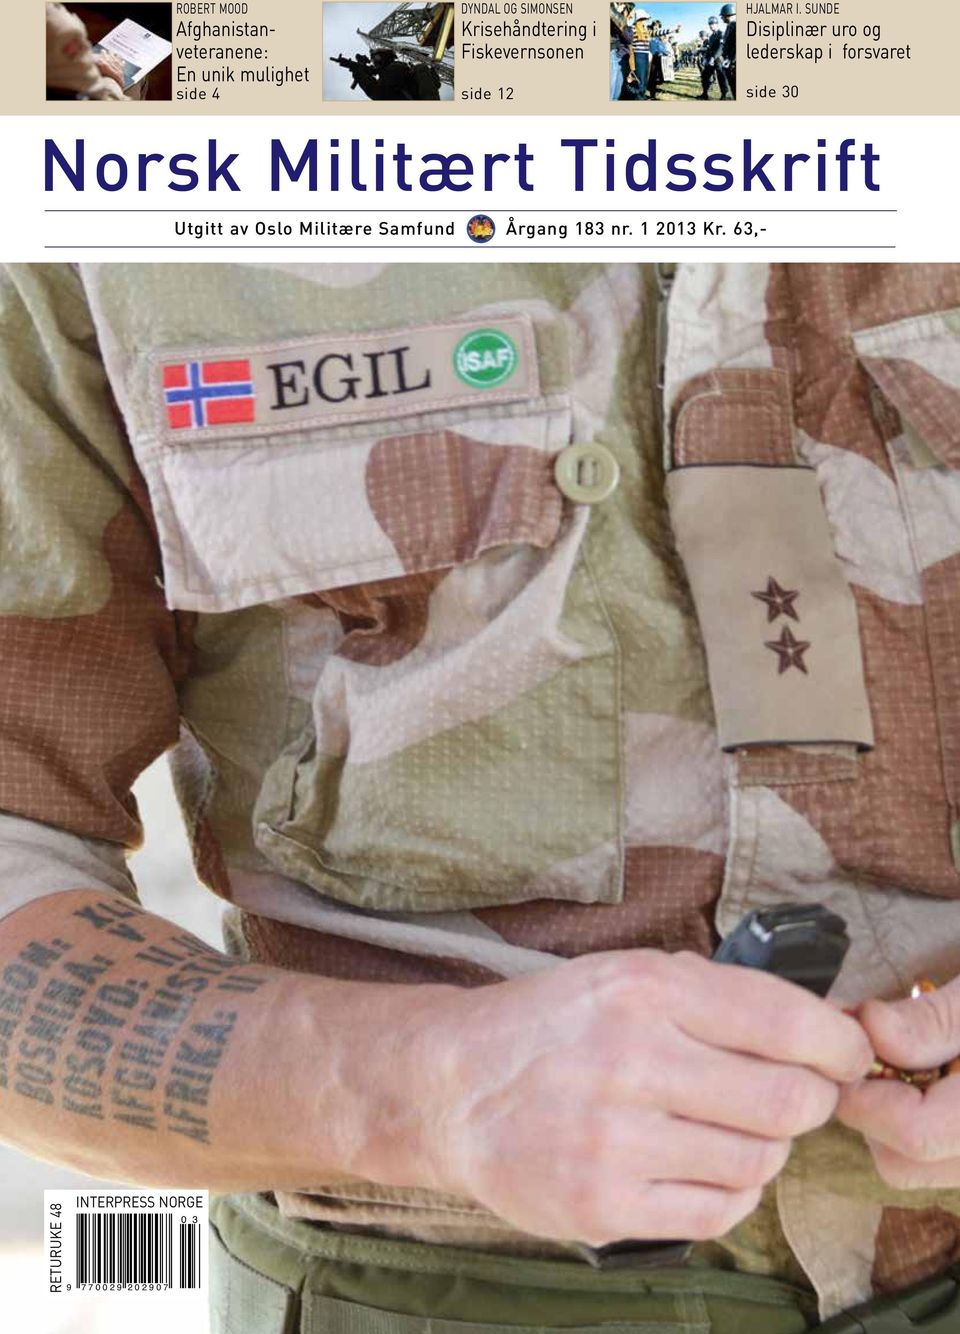 SUNDE Disiplinær uro og lederskap i forsvaret side 30 Norsk Militært Tidsskrift